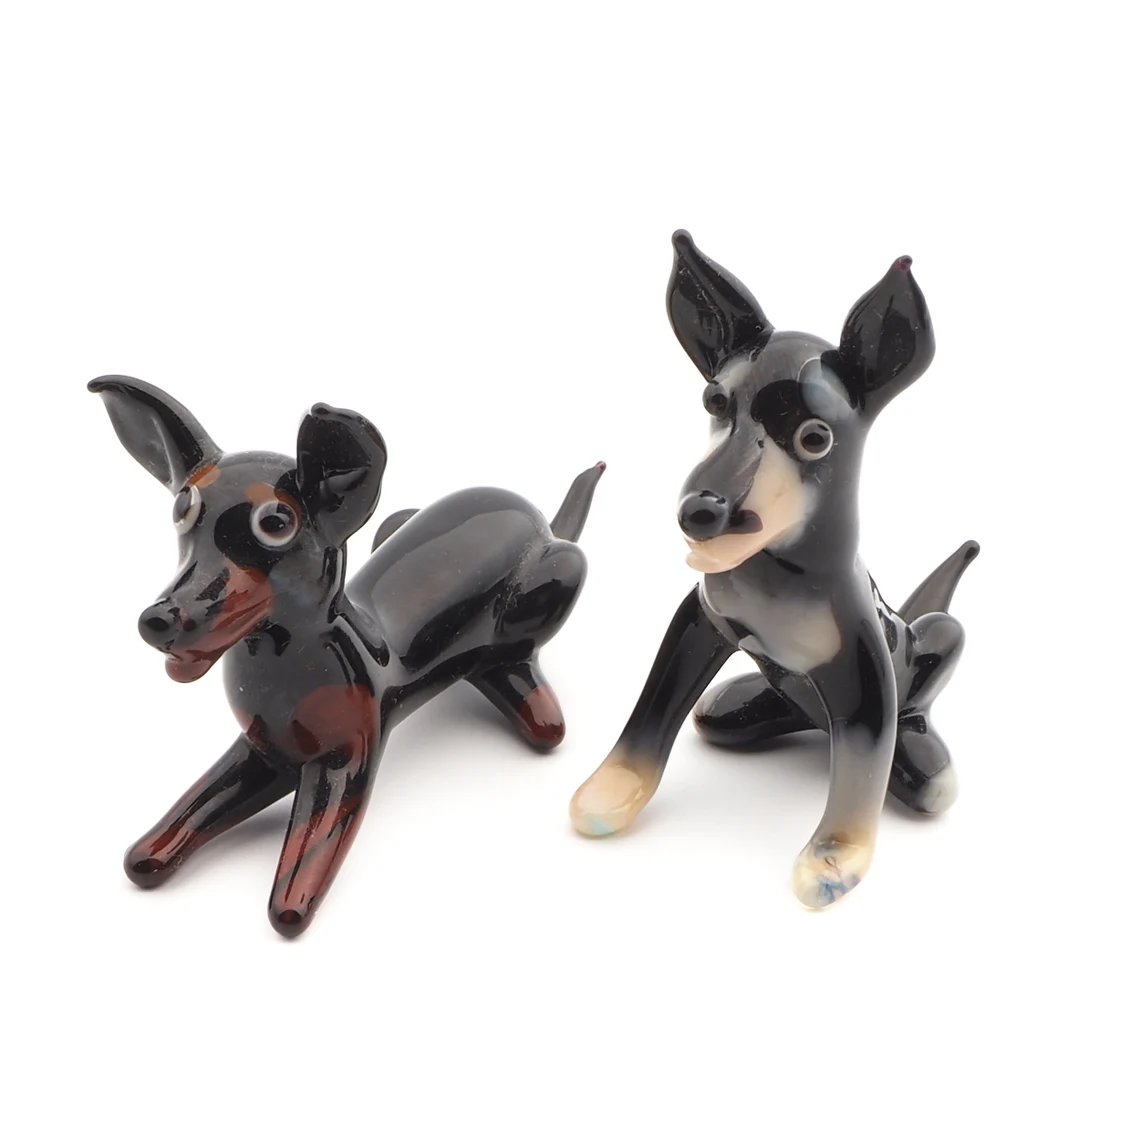 Lot (2) Czech handmade lampwork glass miniature dog figurines ornaments